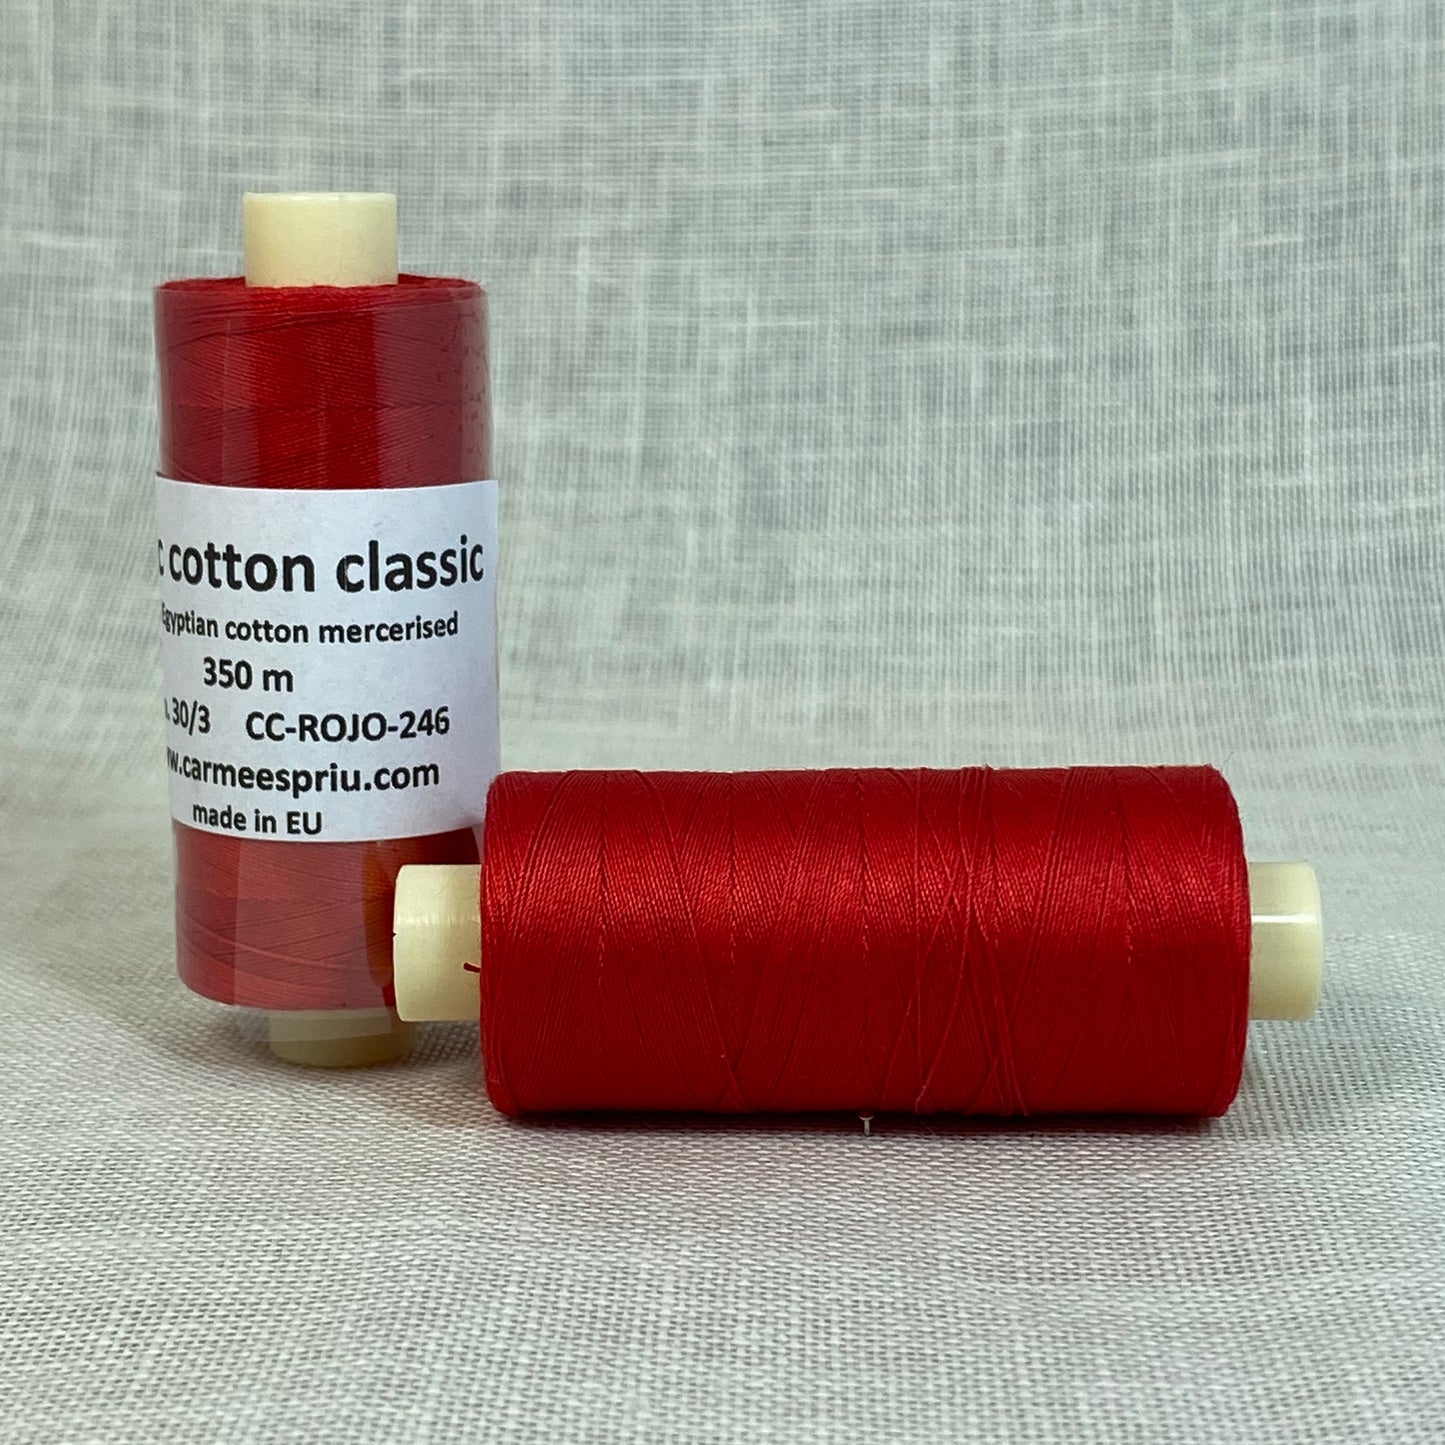 Basic cotton classic rojo nº 246